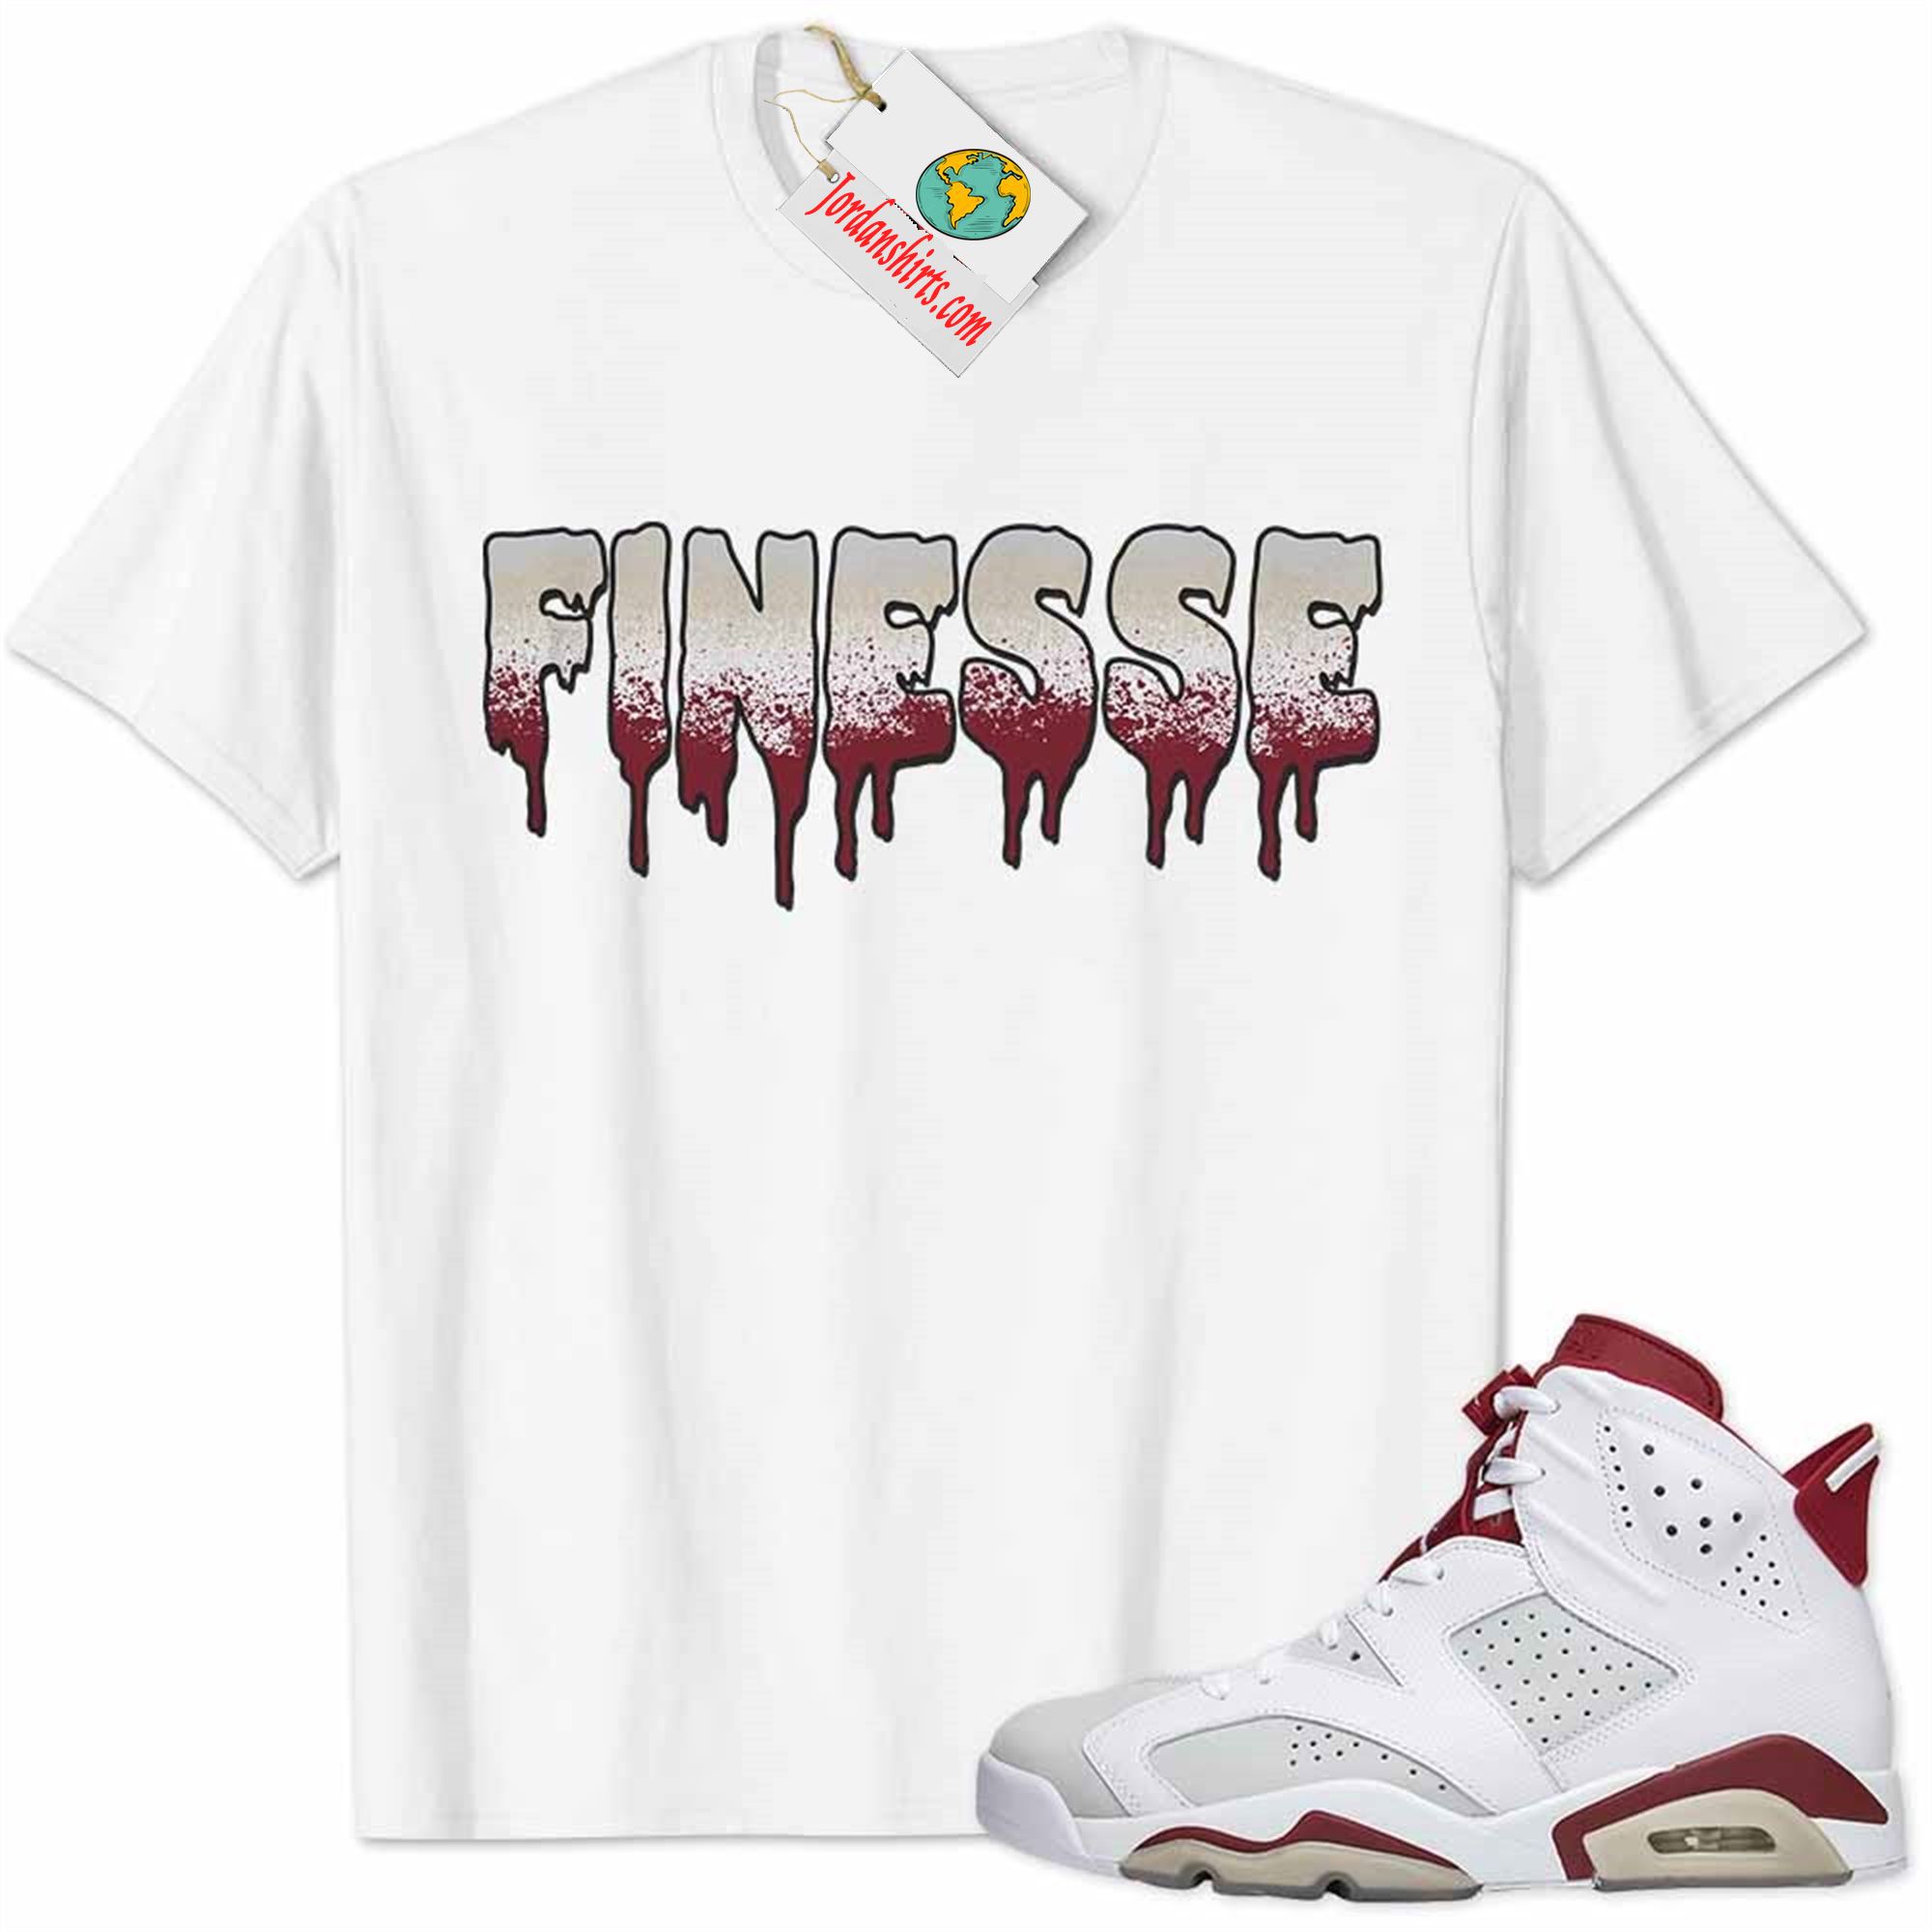 Jordan 6 Shirt, Jordan 6 Alternate Shirt Finesse Drip White Full Size Up To 5xl